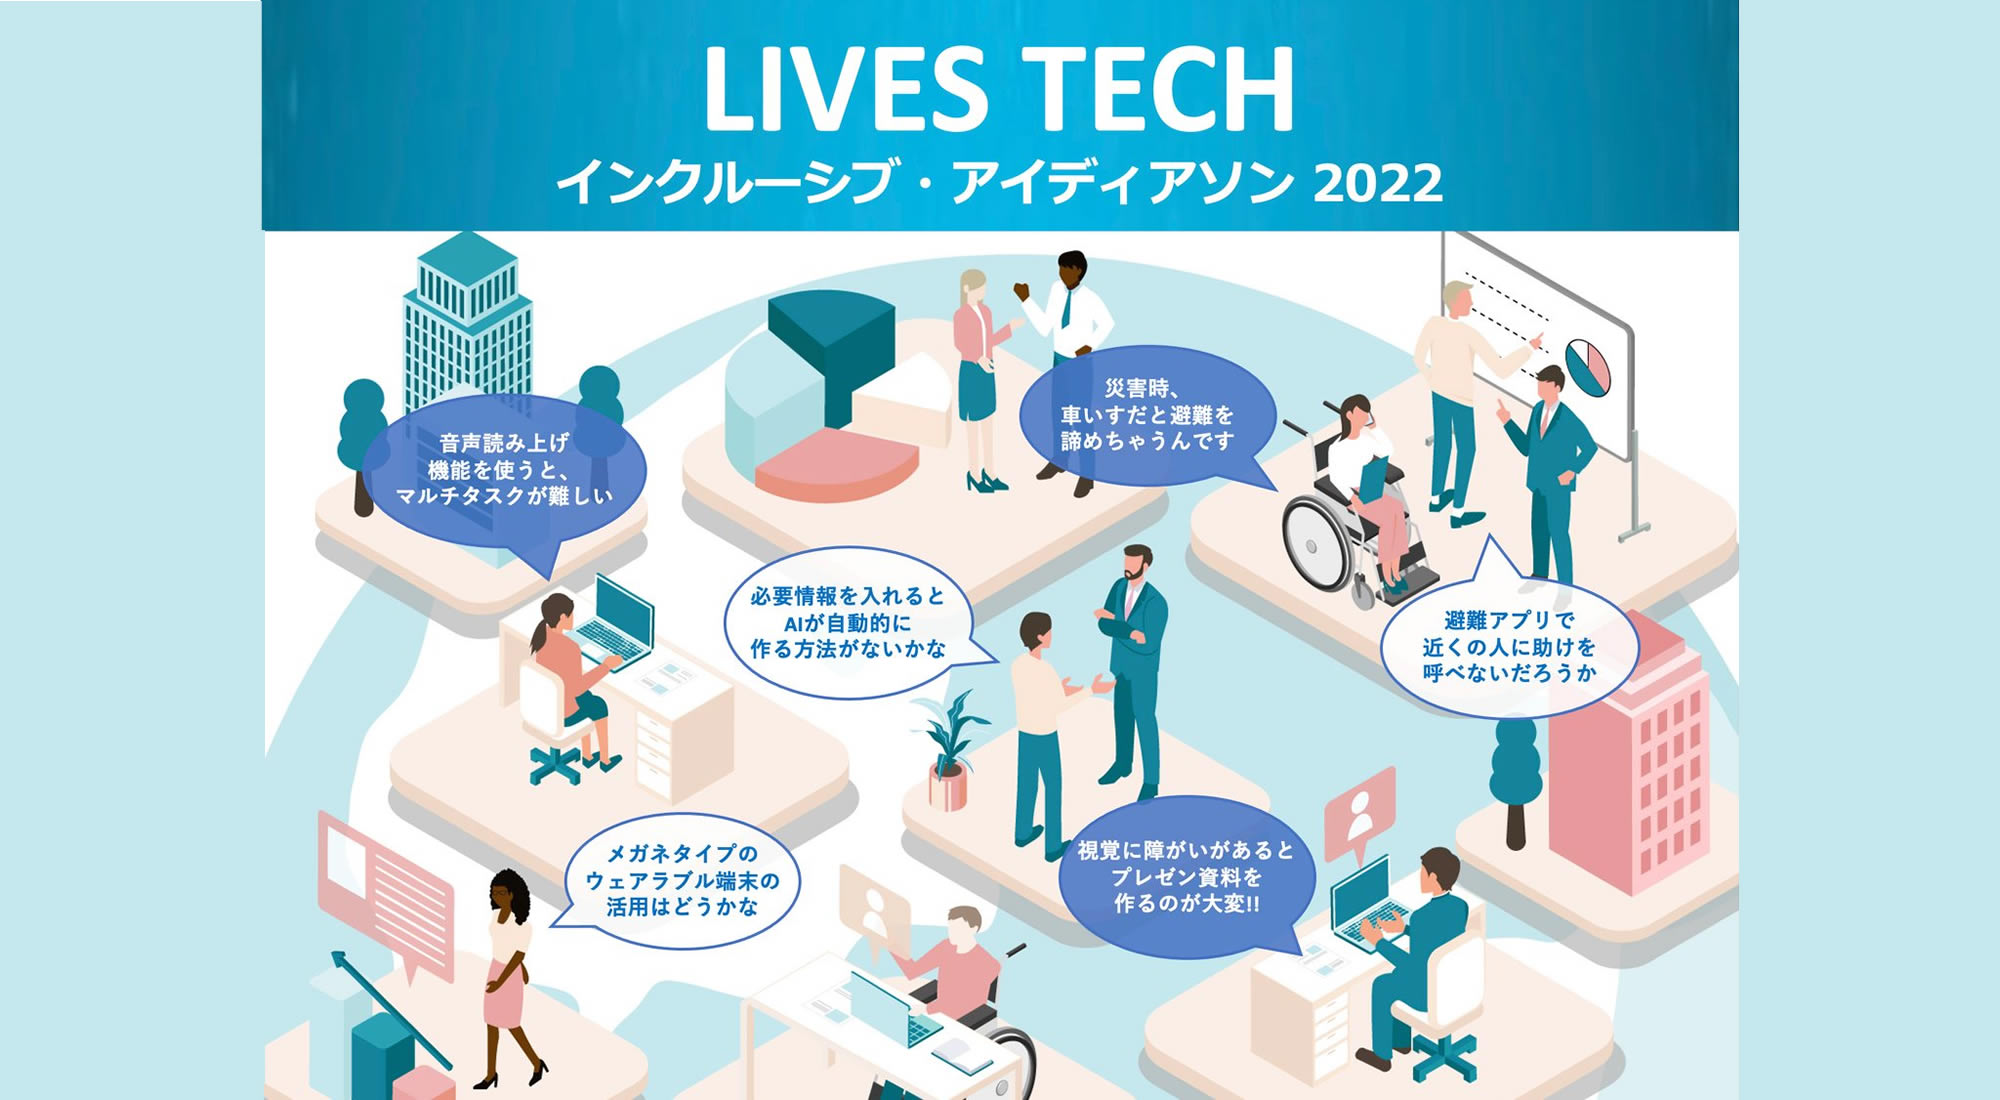 LIVES ✕ Technology